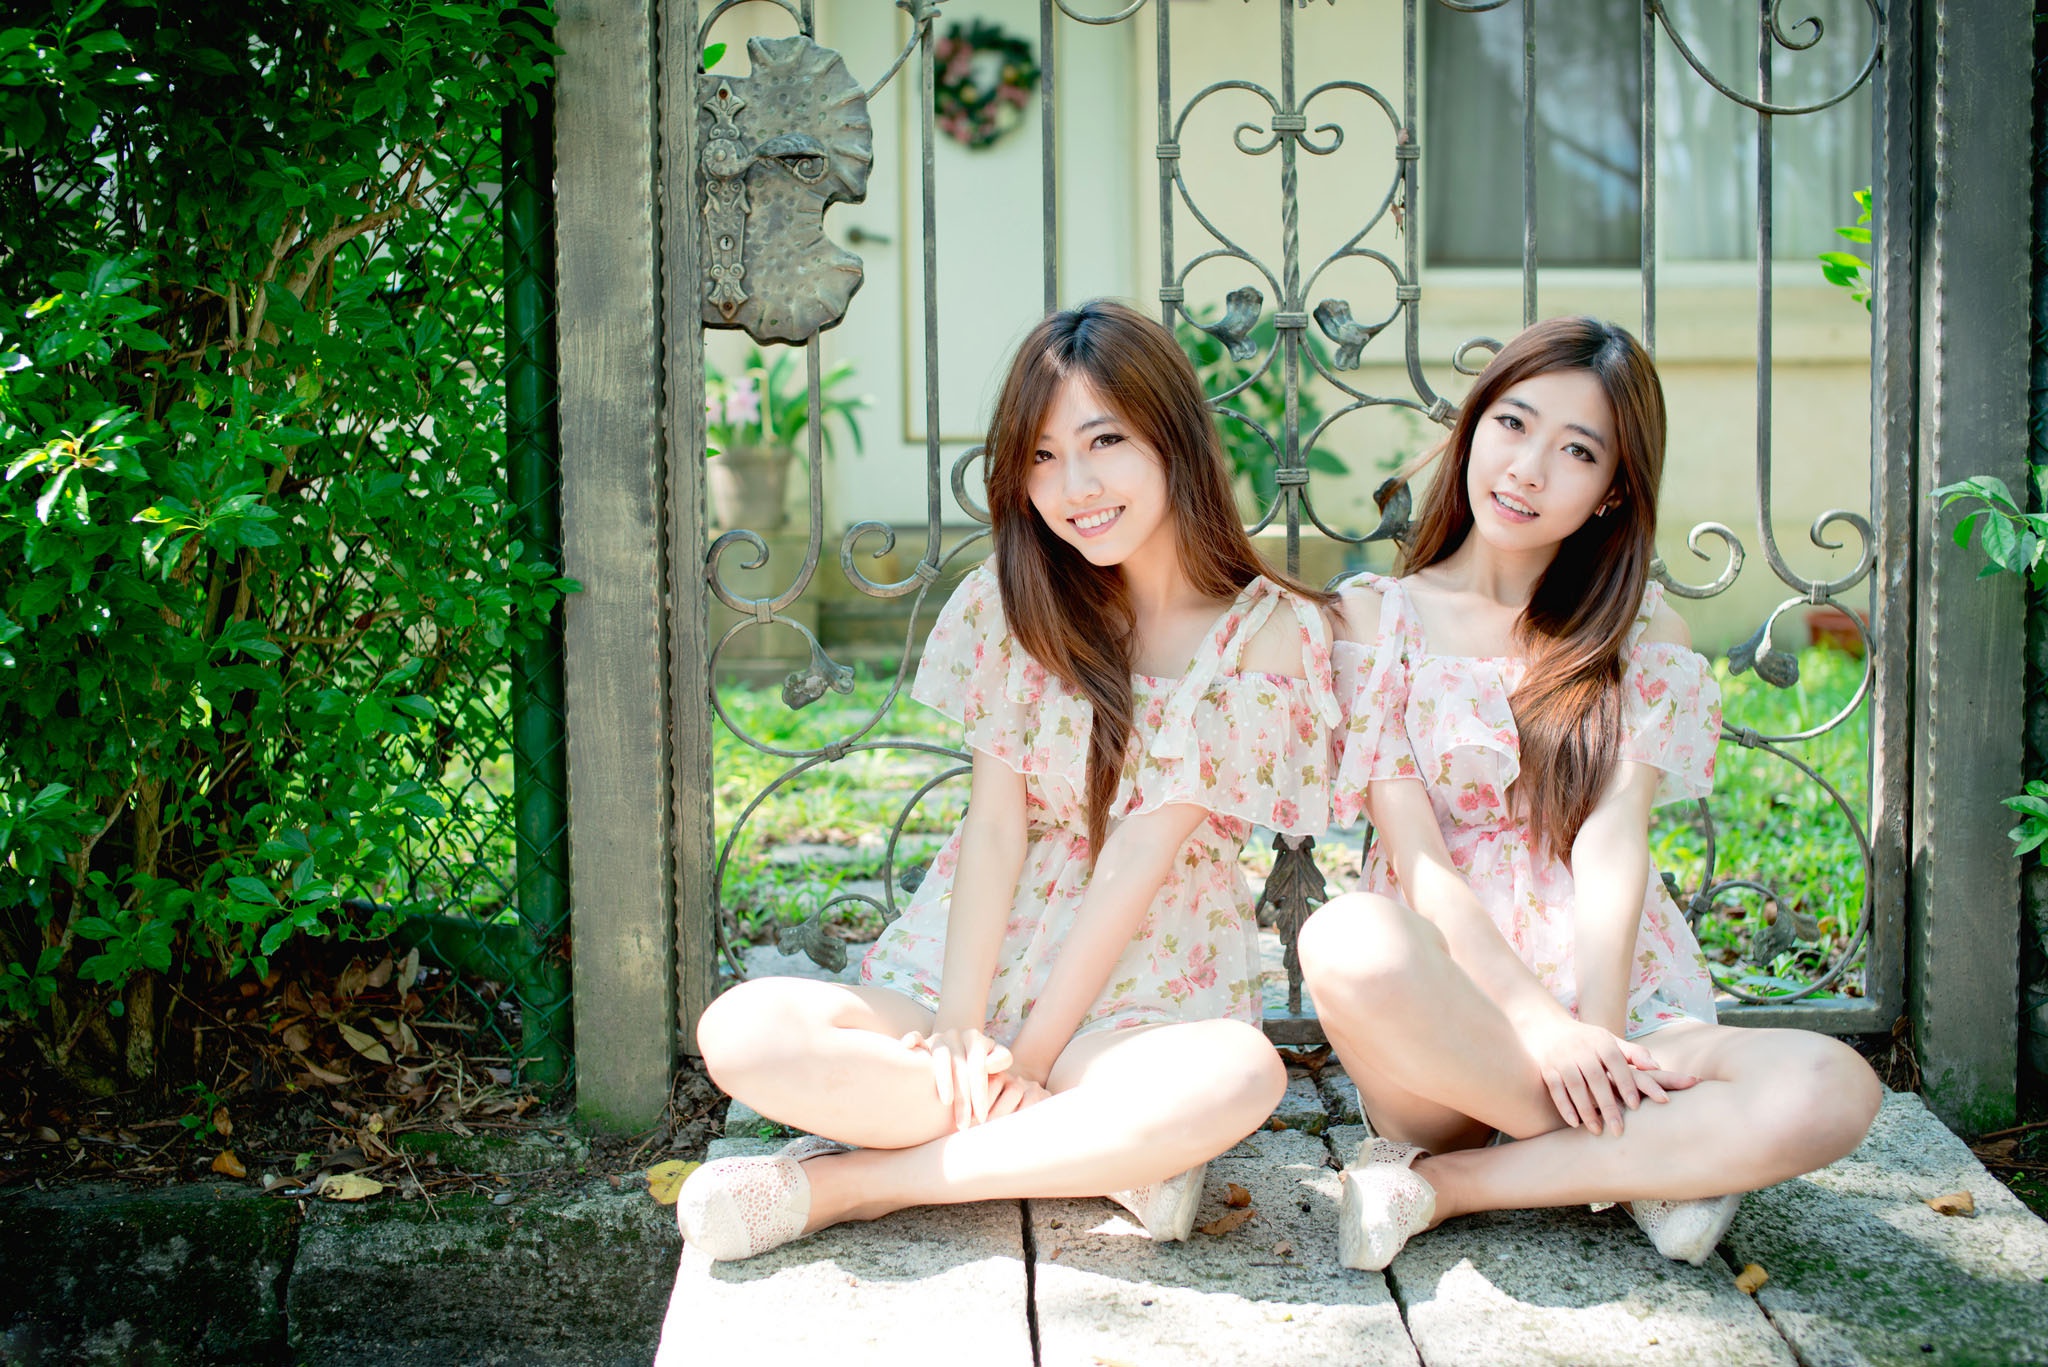 People 2048x1367 Asian model women long hair dark hair sitting legs crossed flower dress bushes depth of field house door two women